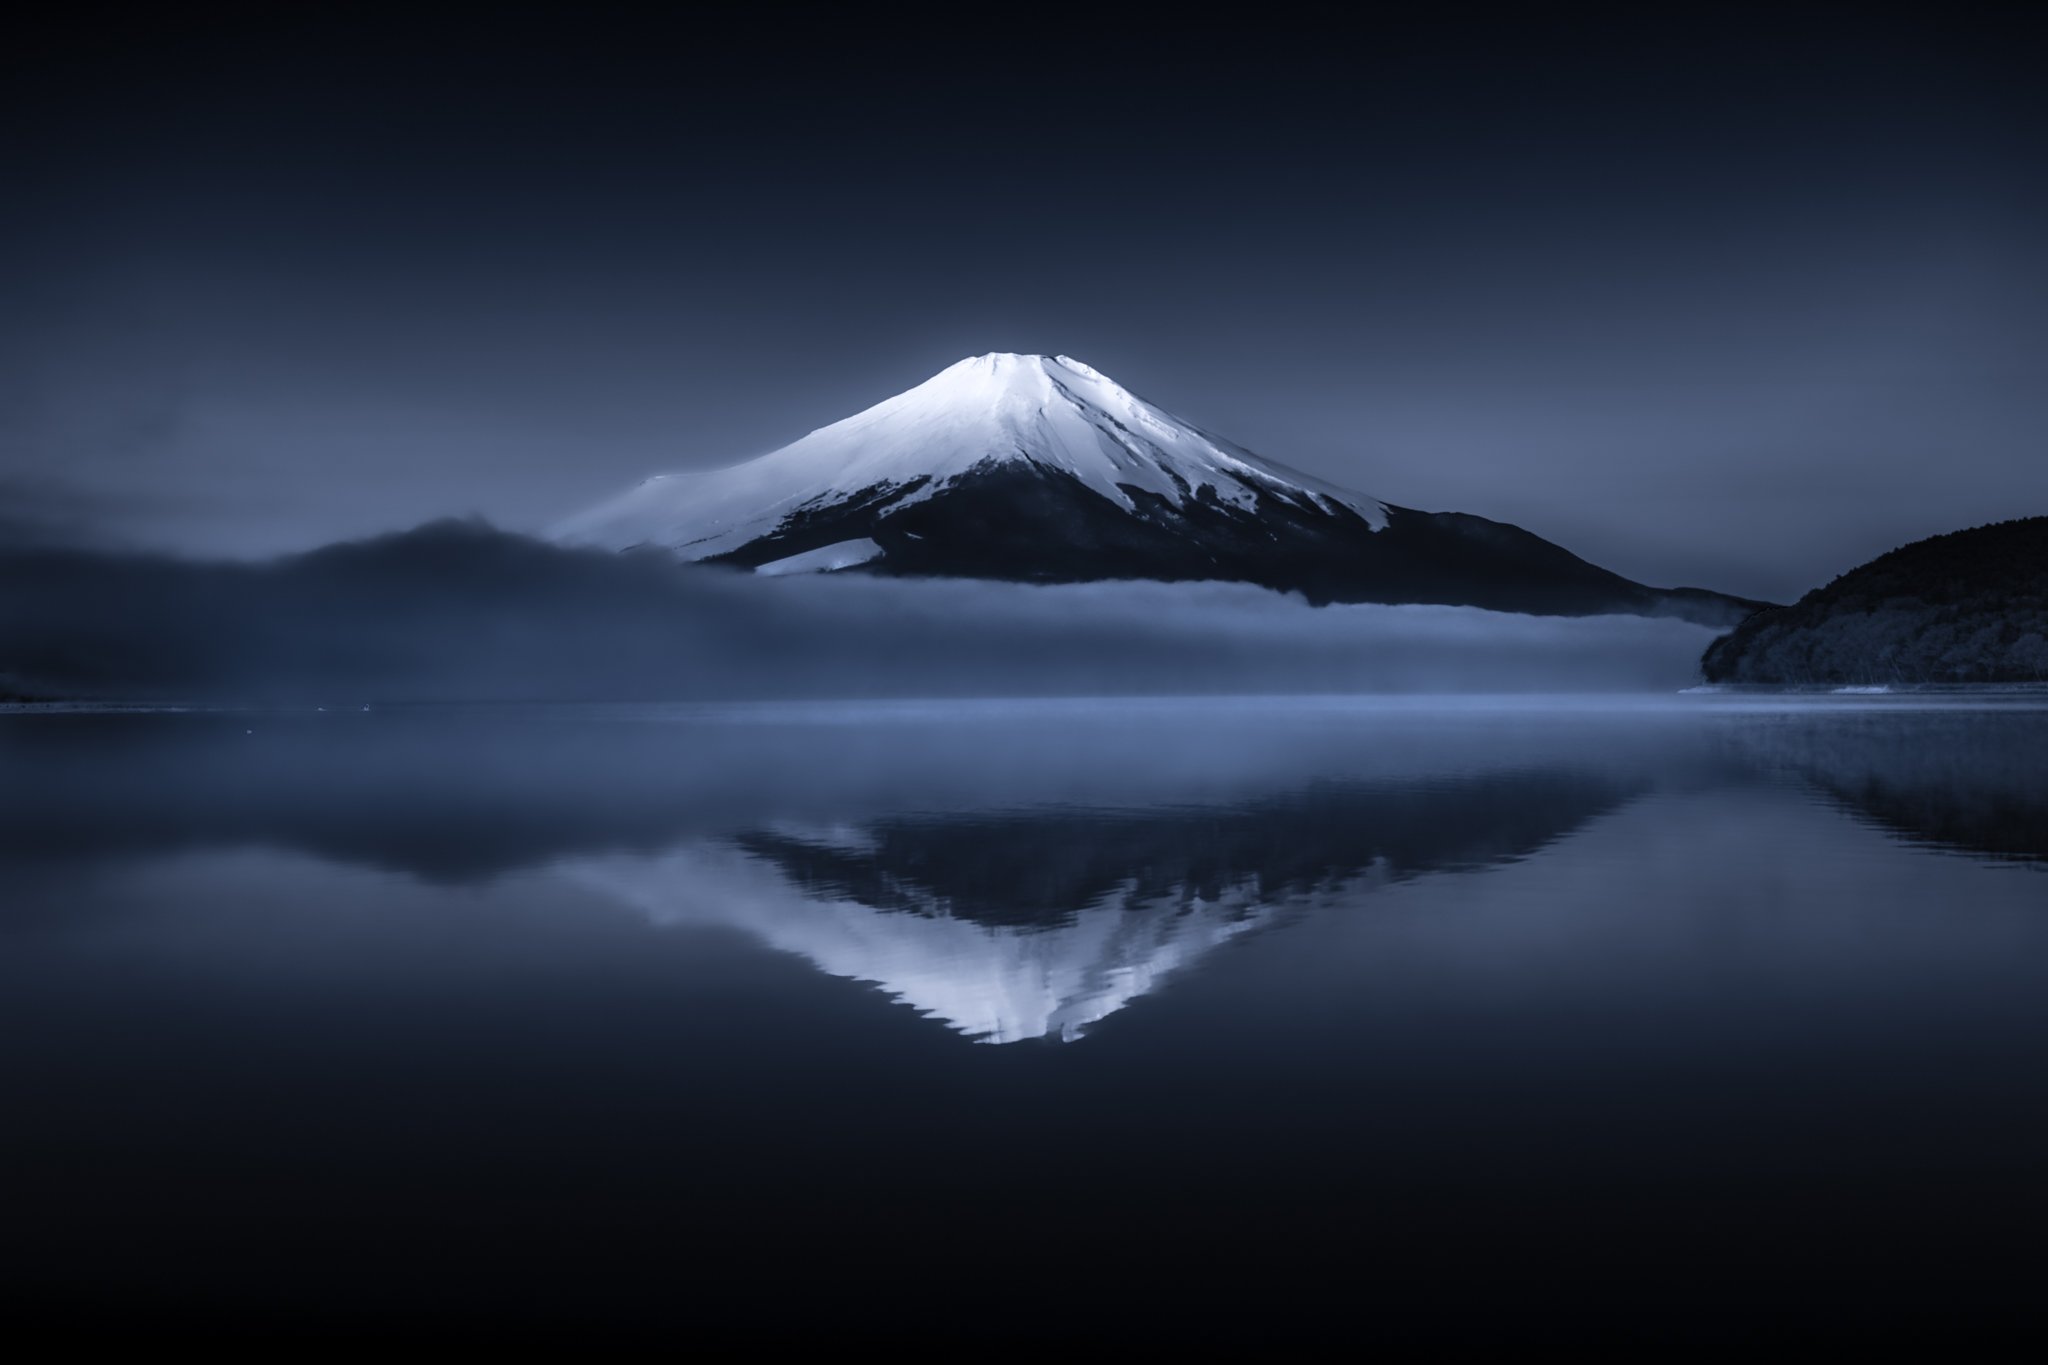 Fuji,mountain,Japan,reflection,water,lake,cloud,fog,snow,beautiful,amazing, Takashi